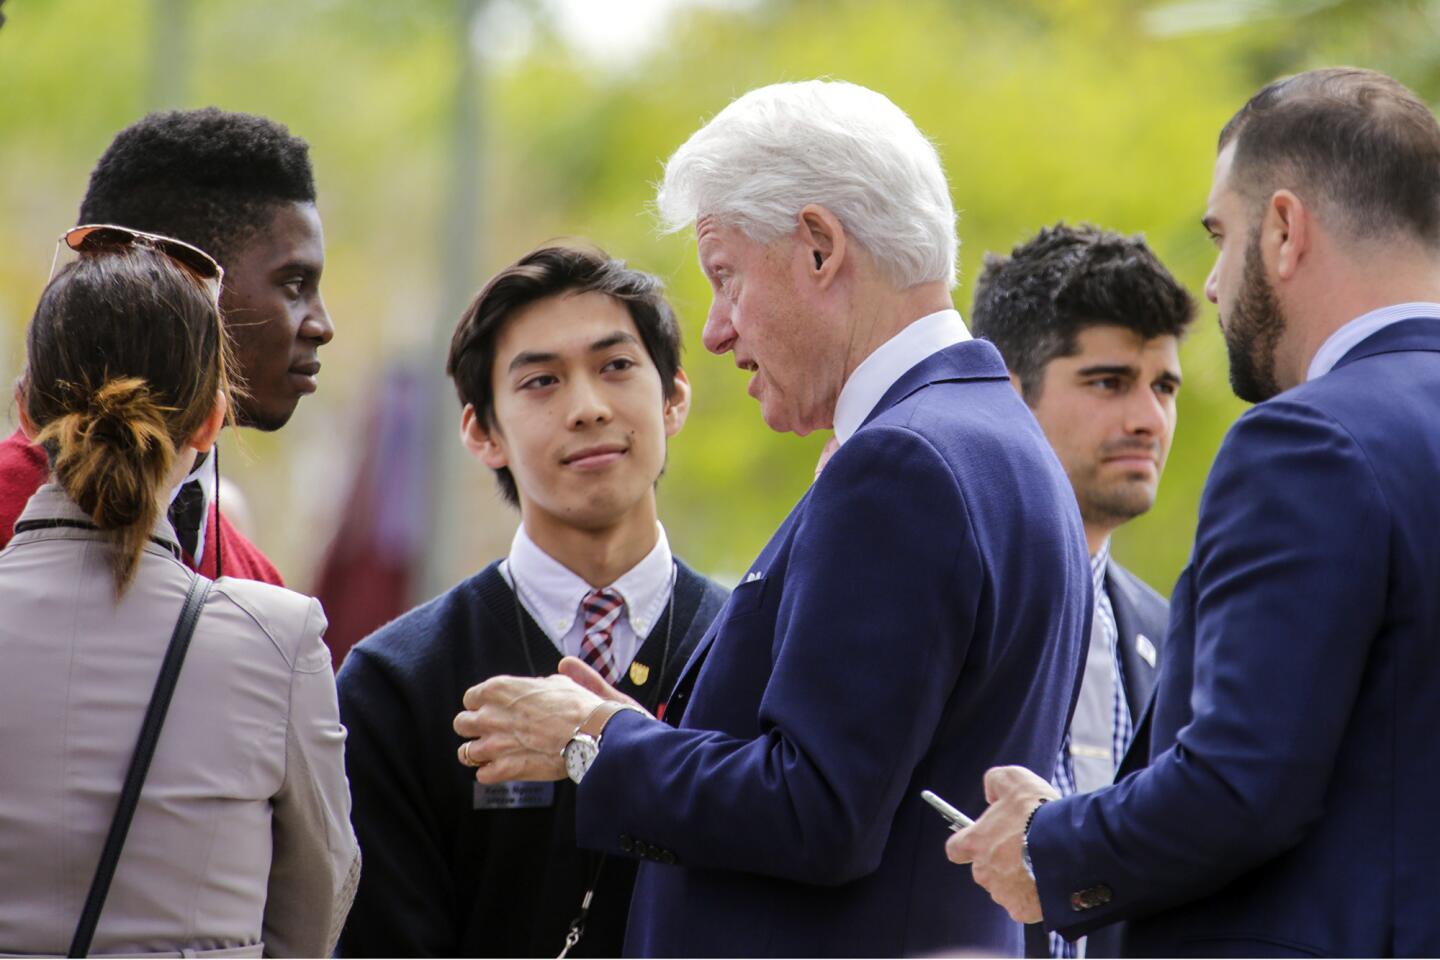 Bill Clinton at Loyola Marymount